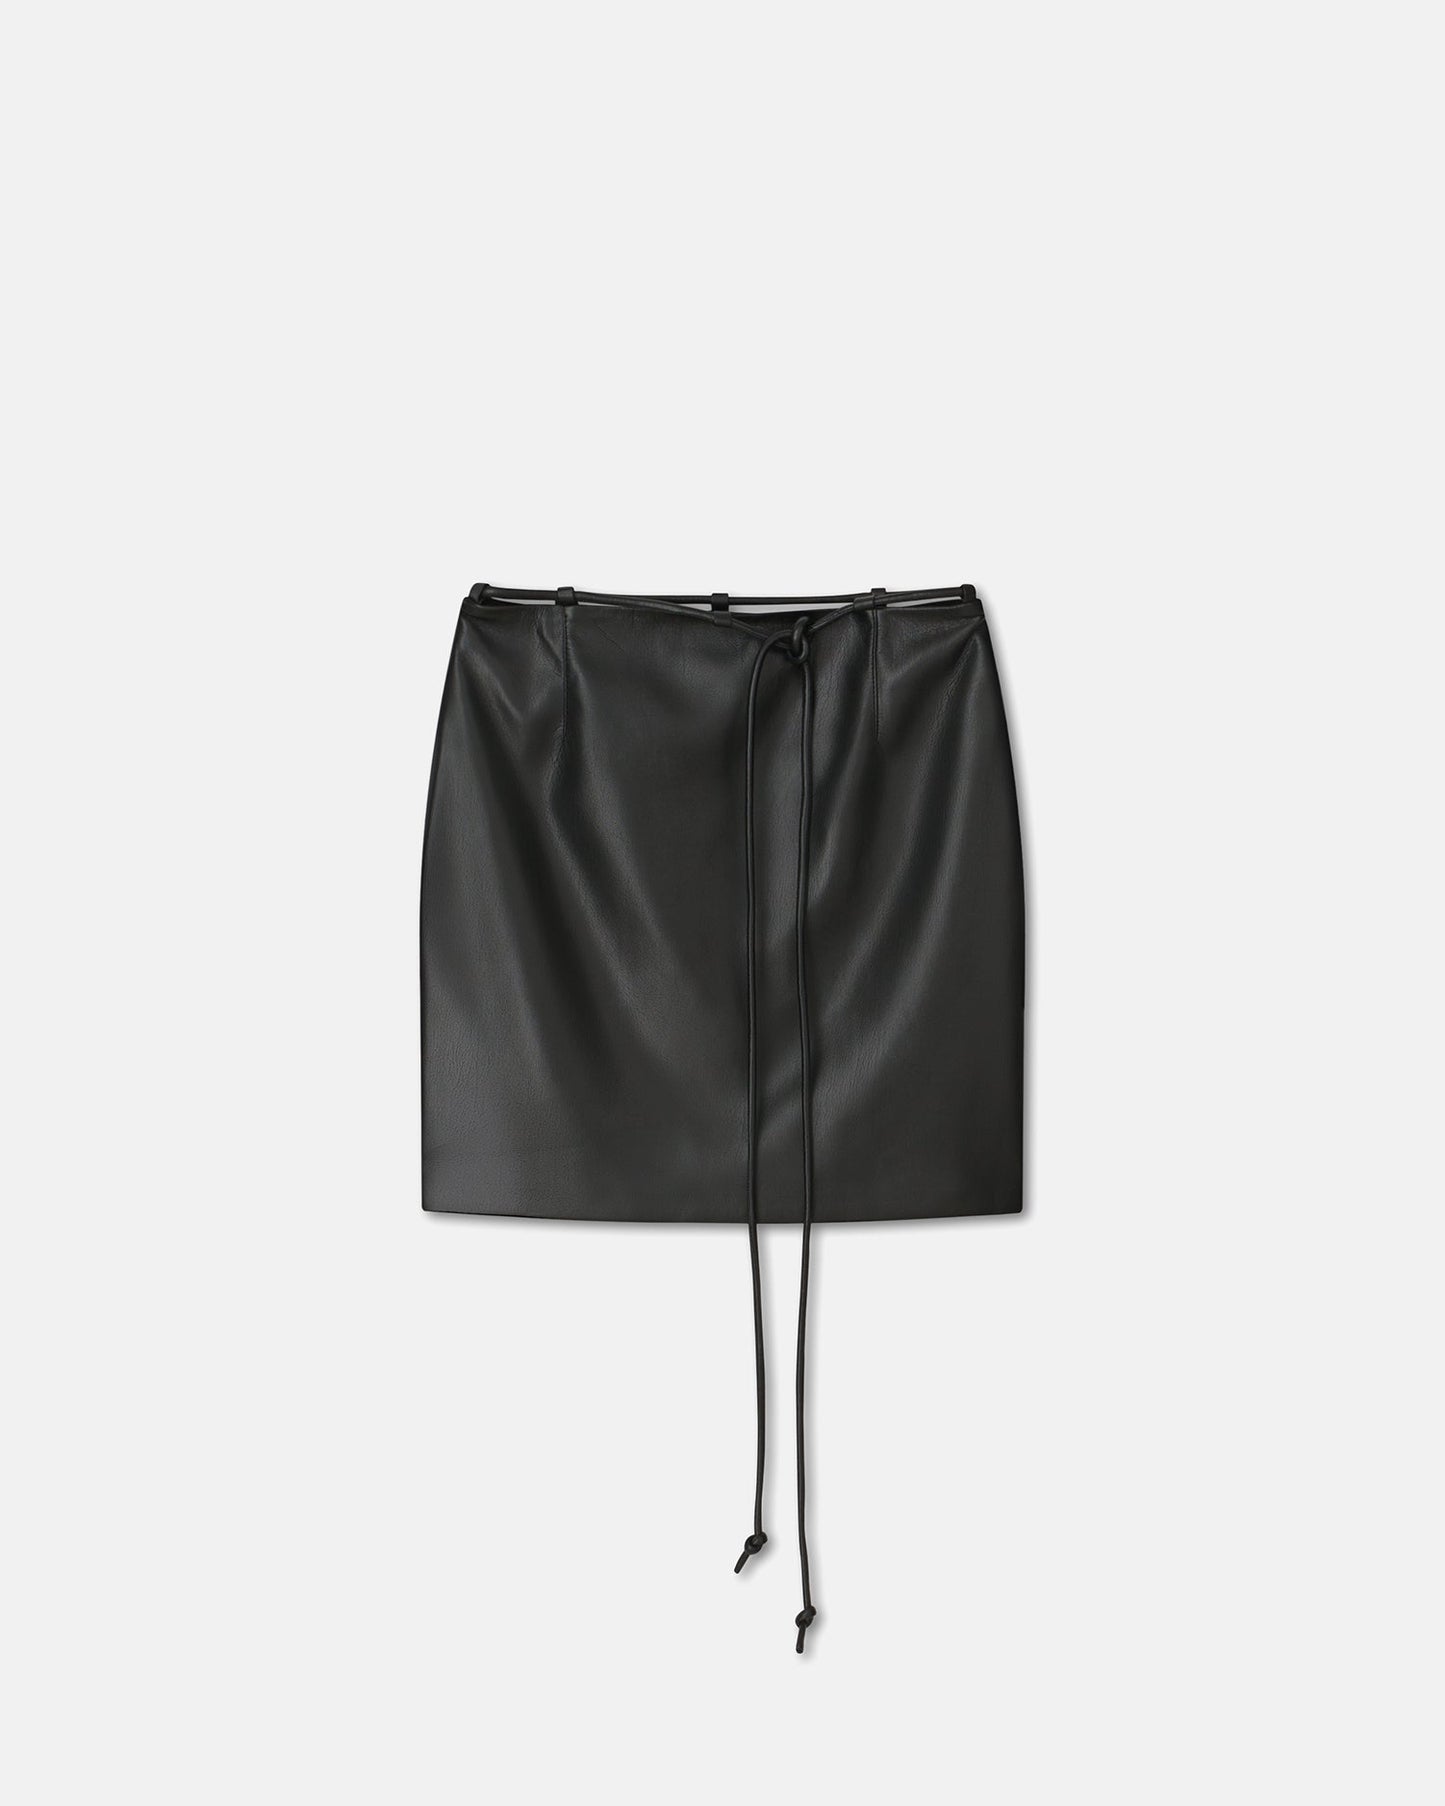 Lonne - Sale Okobor™ Alt-Leather Skirt - Black